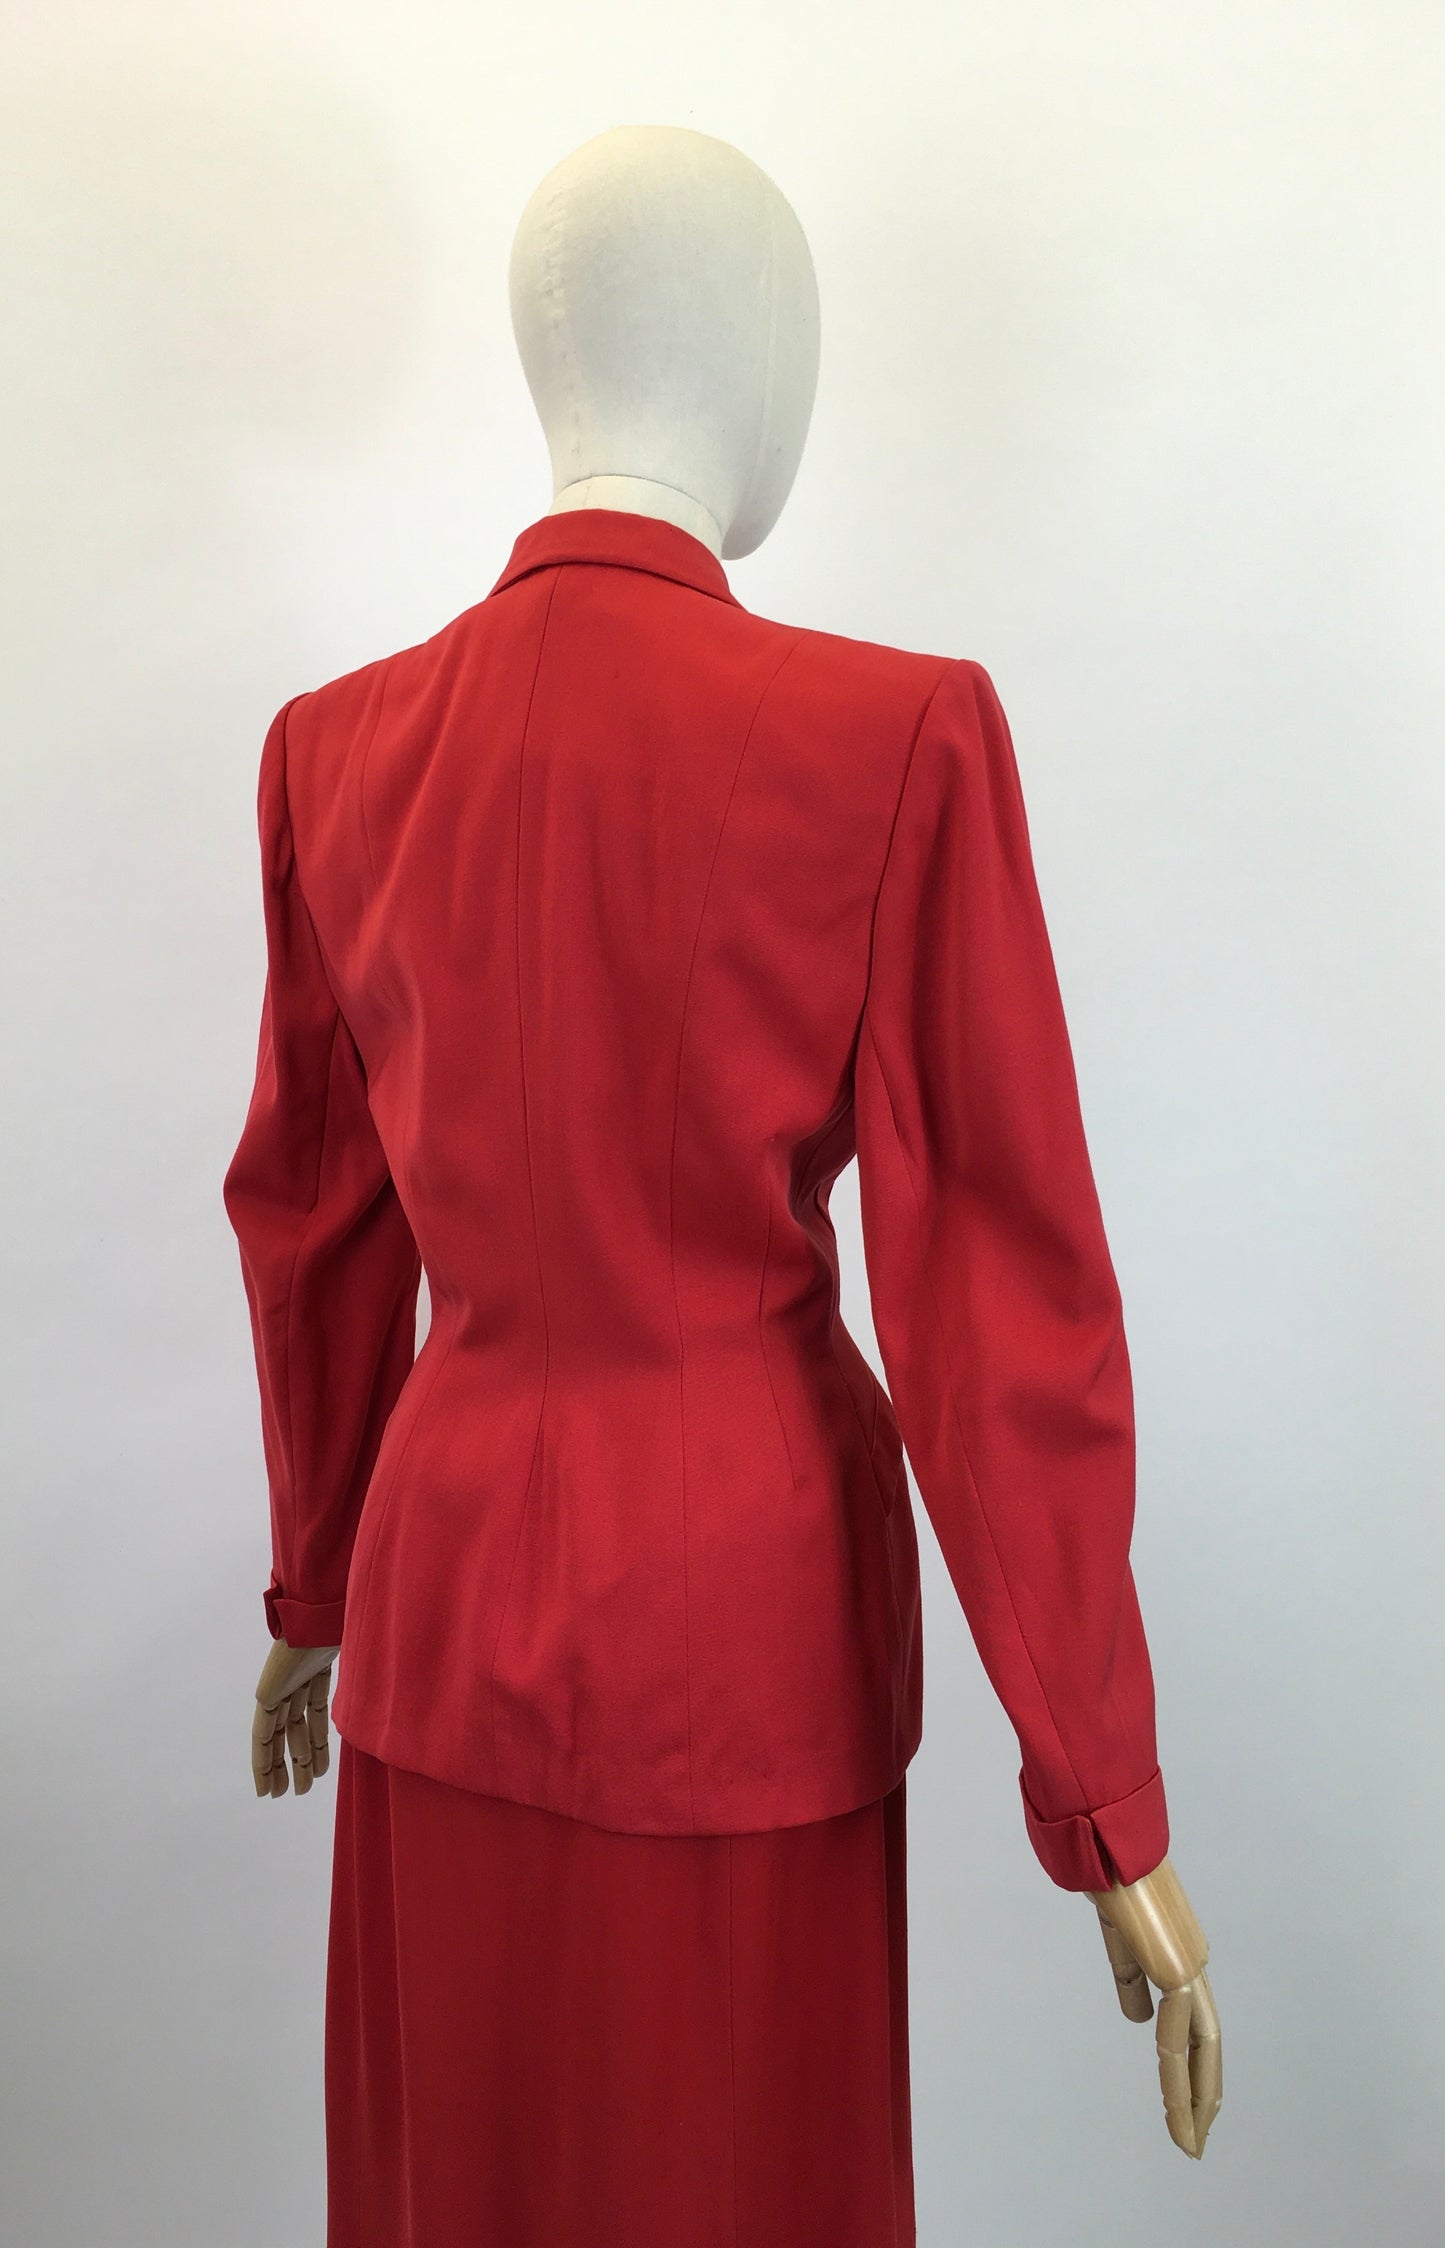 Original 1940's Stunning American 2pc Gaberdine Suit - In A Bright Lipstick Red